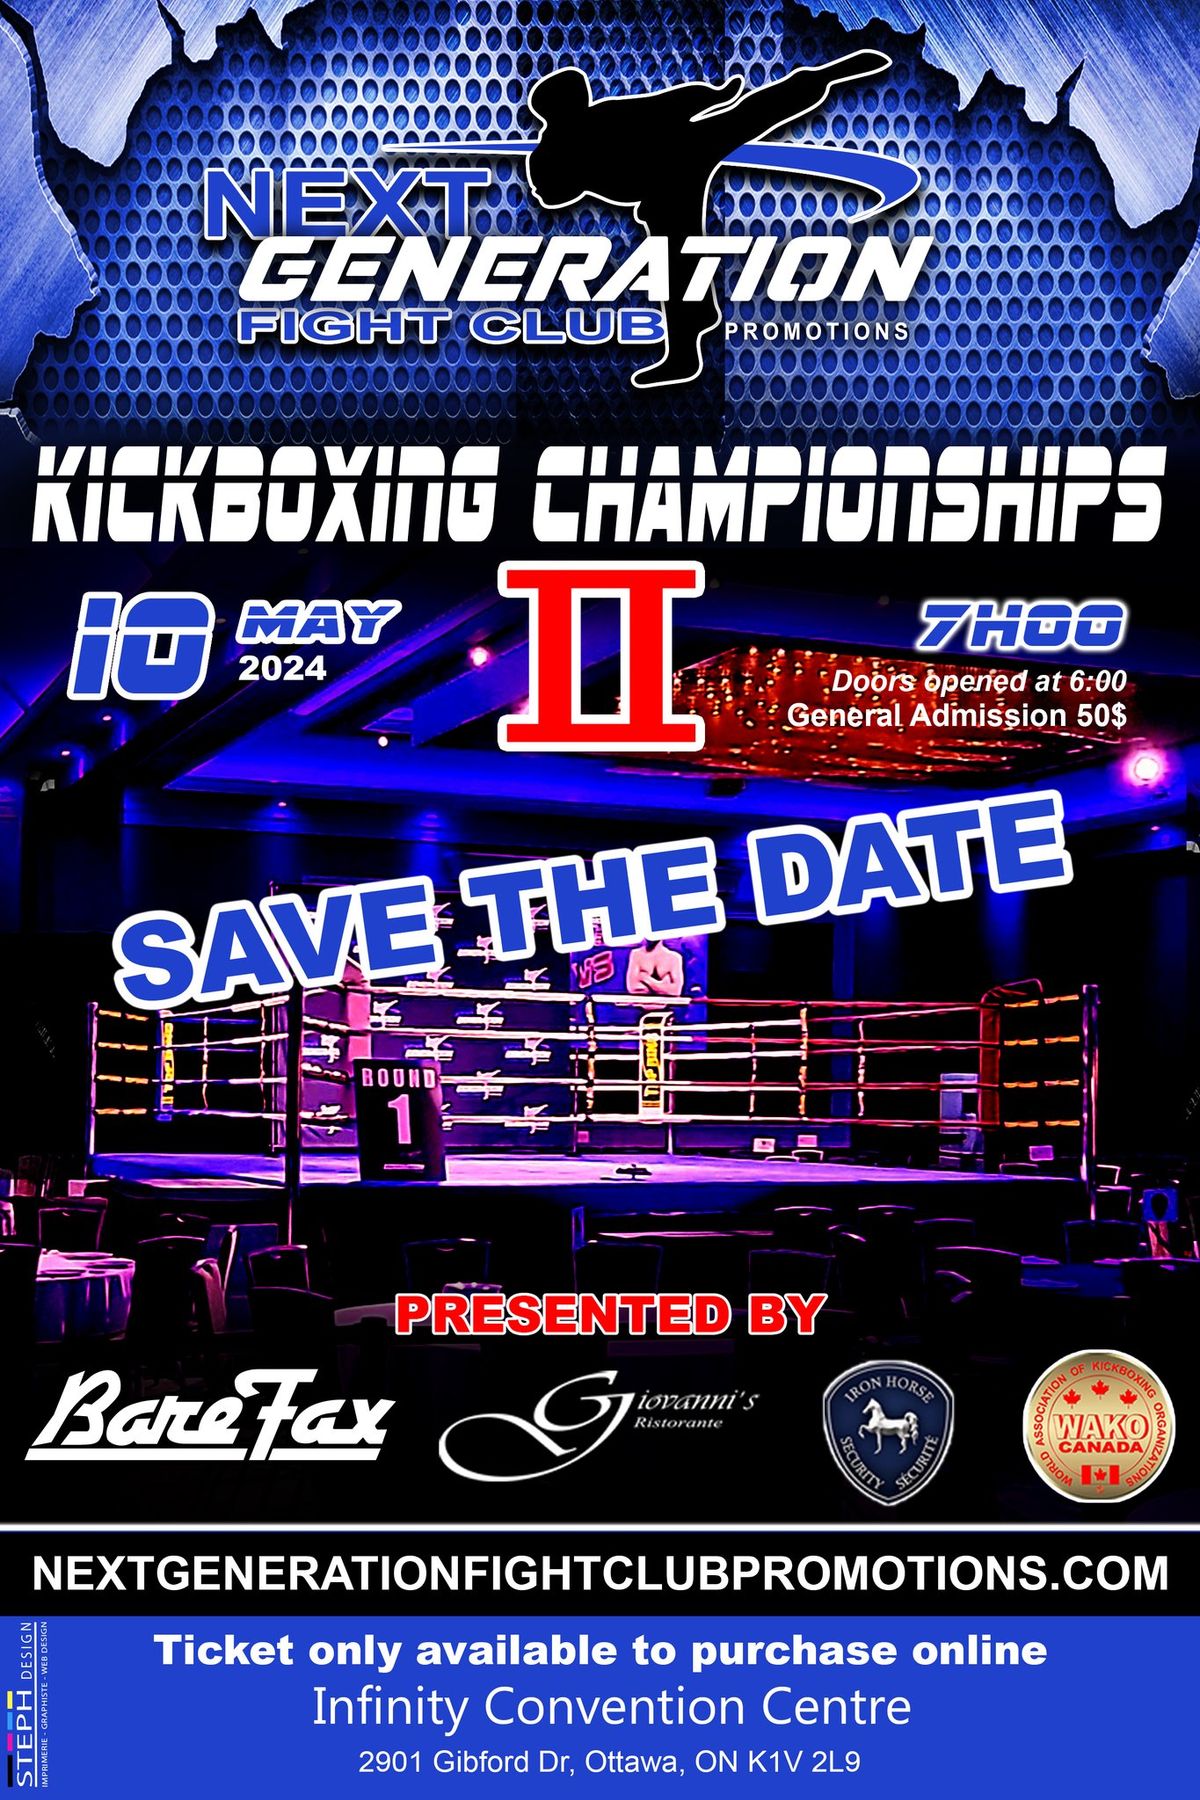 Kick Boxing Night 2